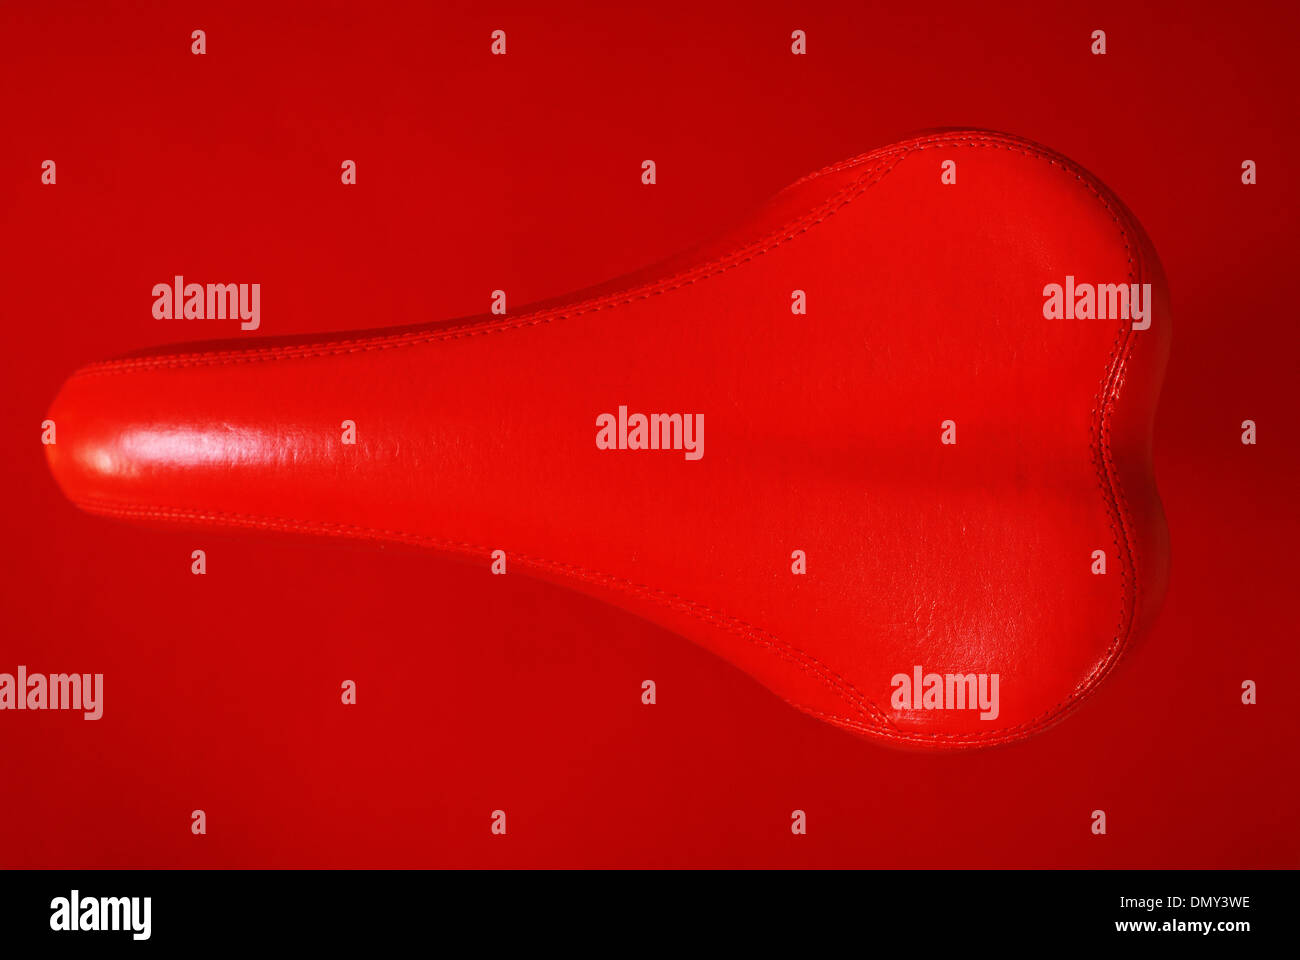 kreative rote Sattel auf rotem Grund Stockfoto